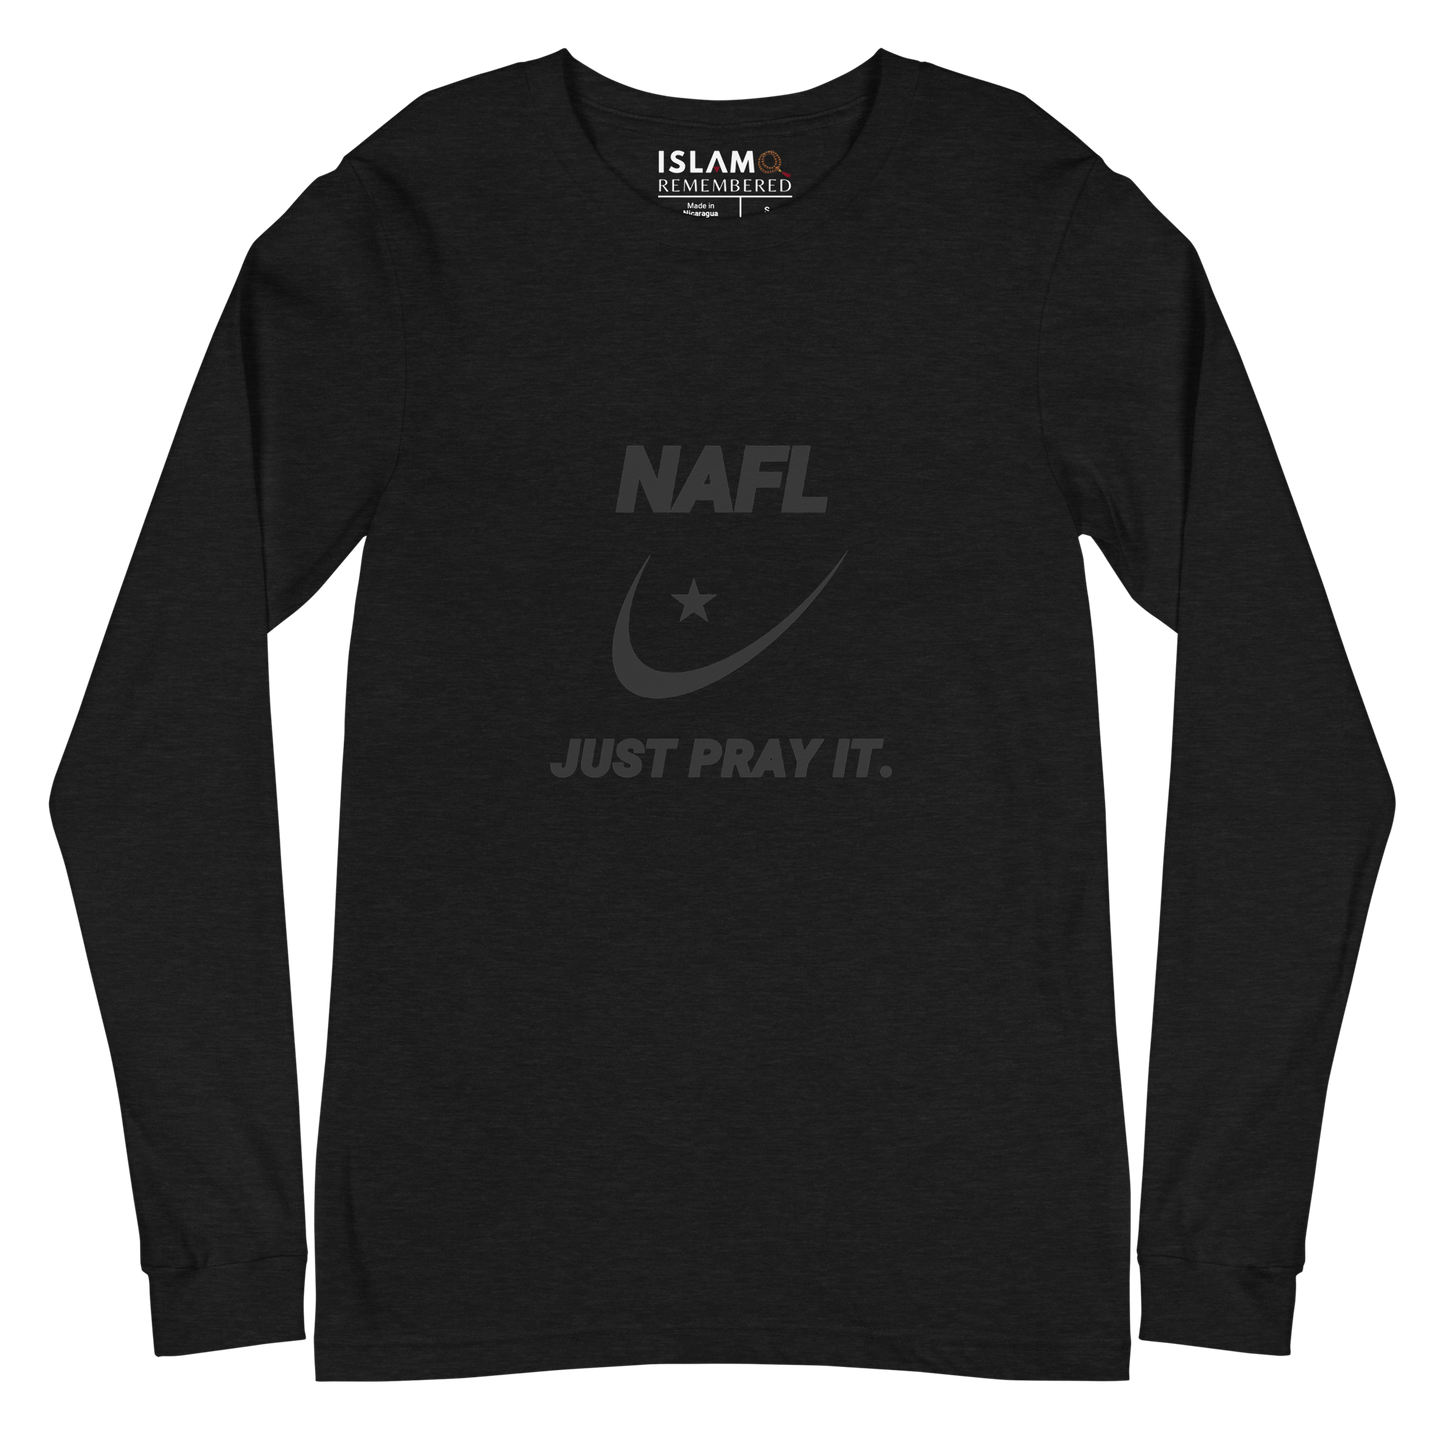 ADULT Long Sleeve Shirt - NAFL JUST PRAY IT w/ Logo - Black